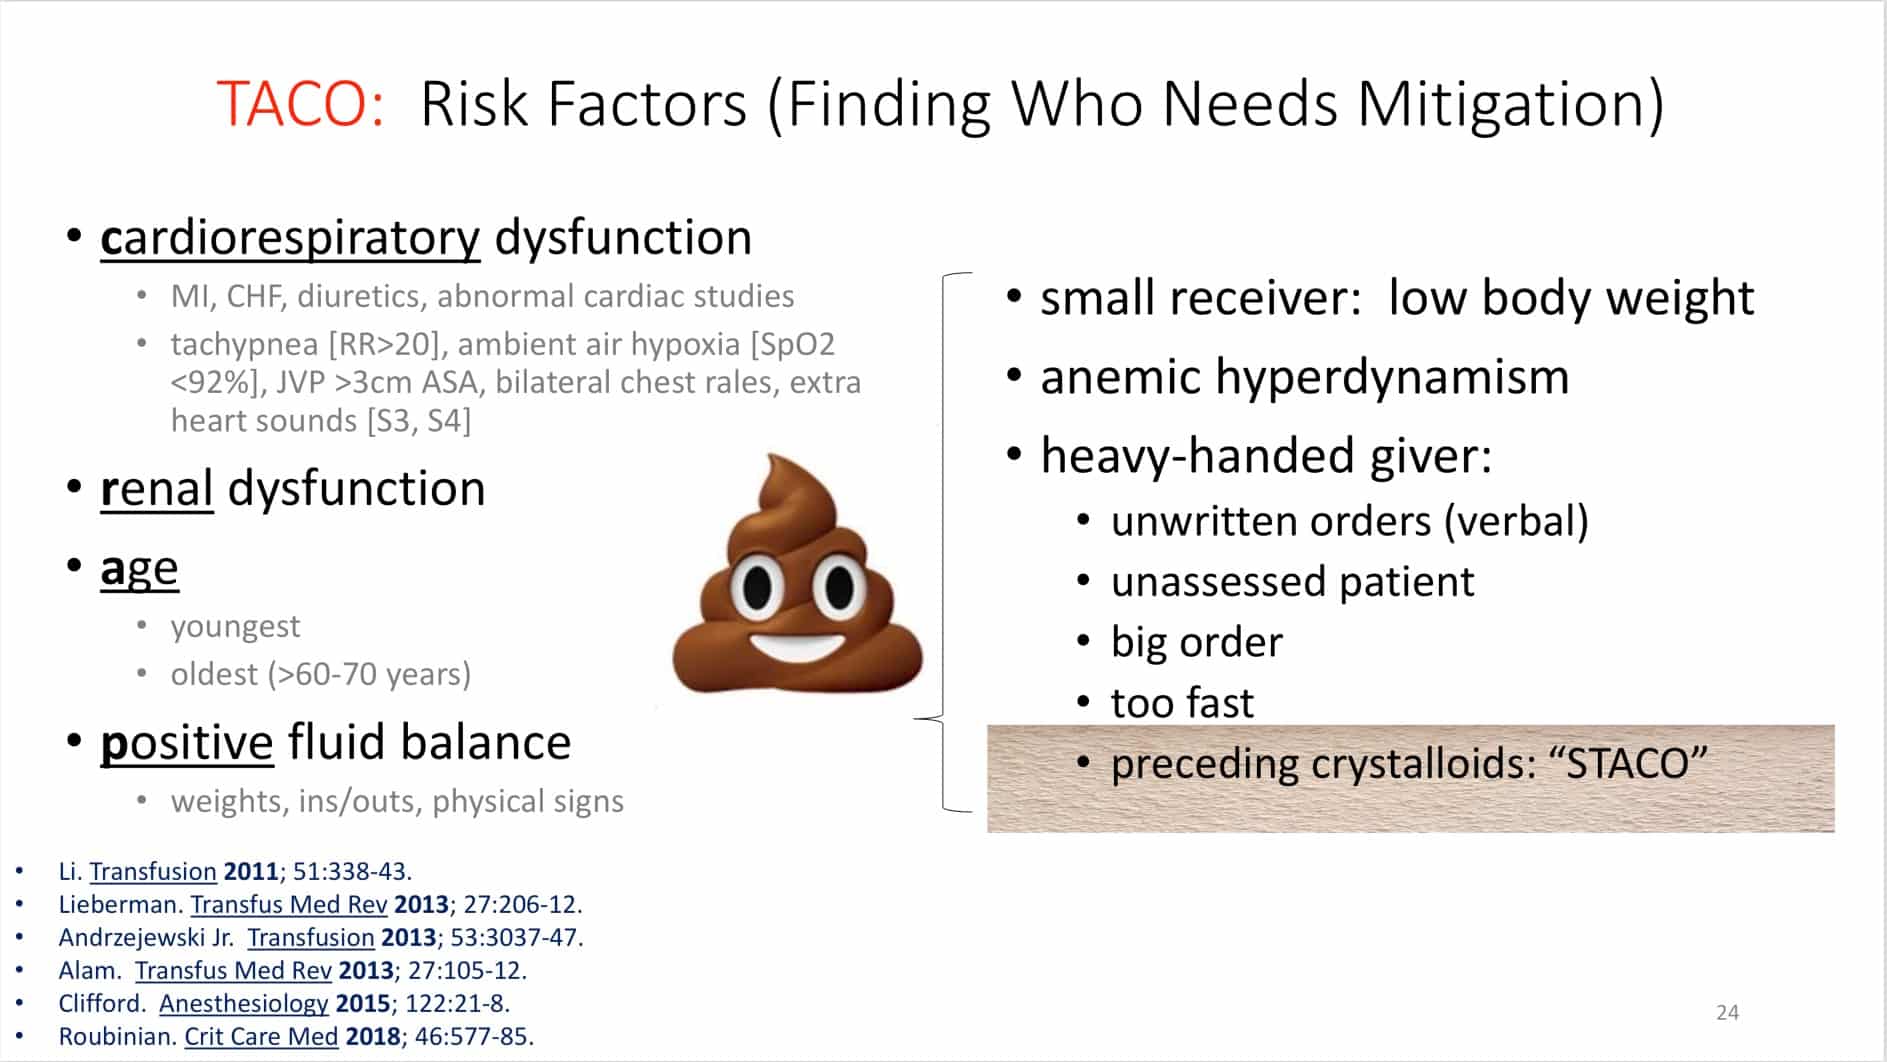 Slide 2: Risk factors for TACO ("CRAP")